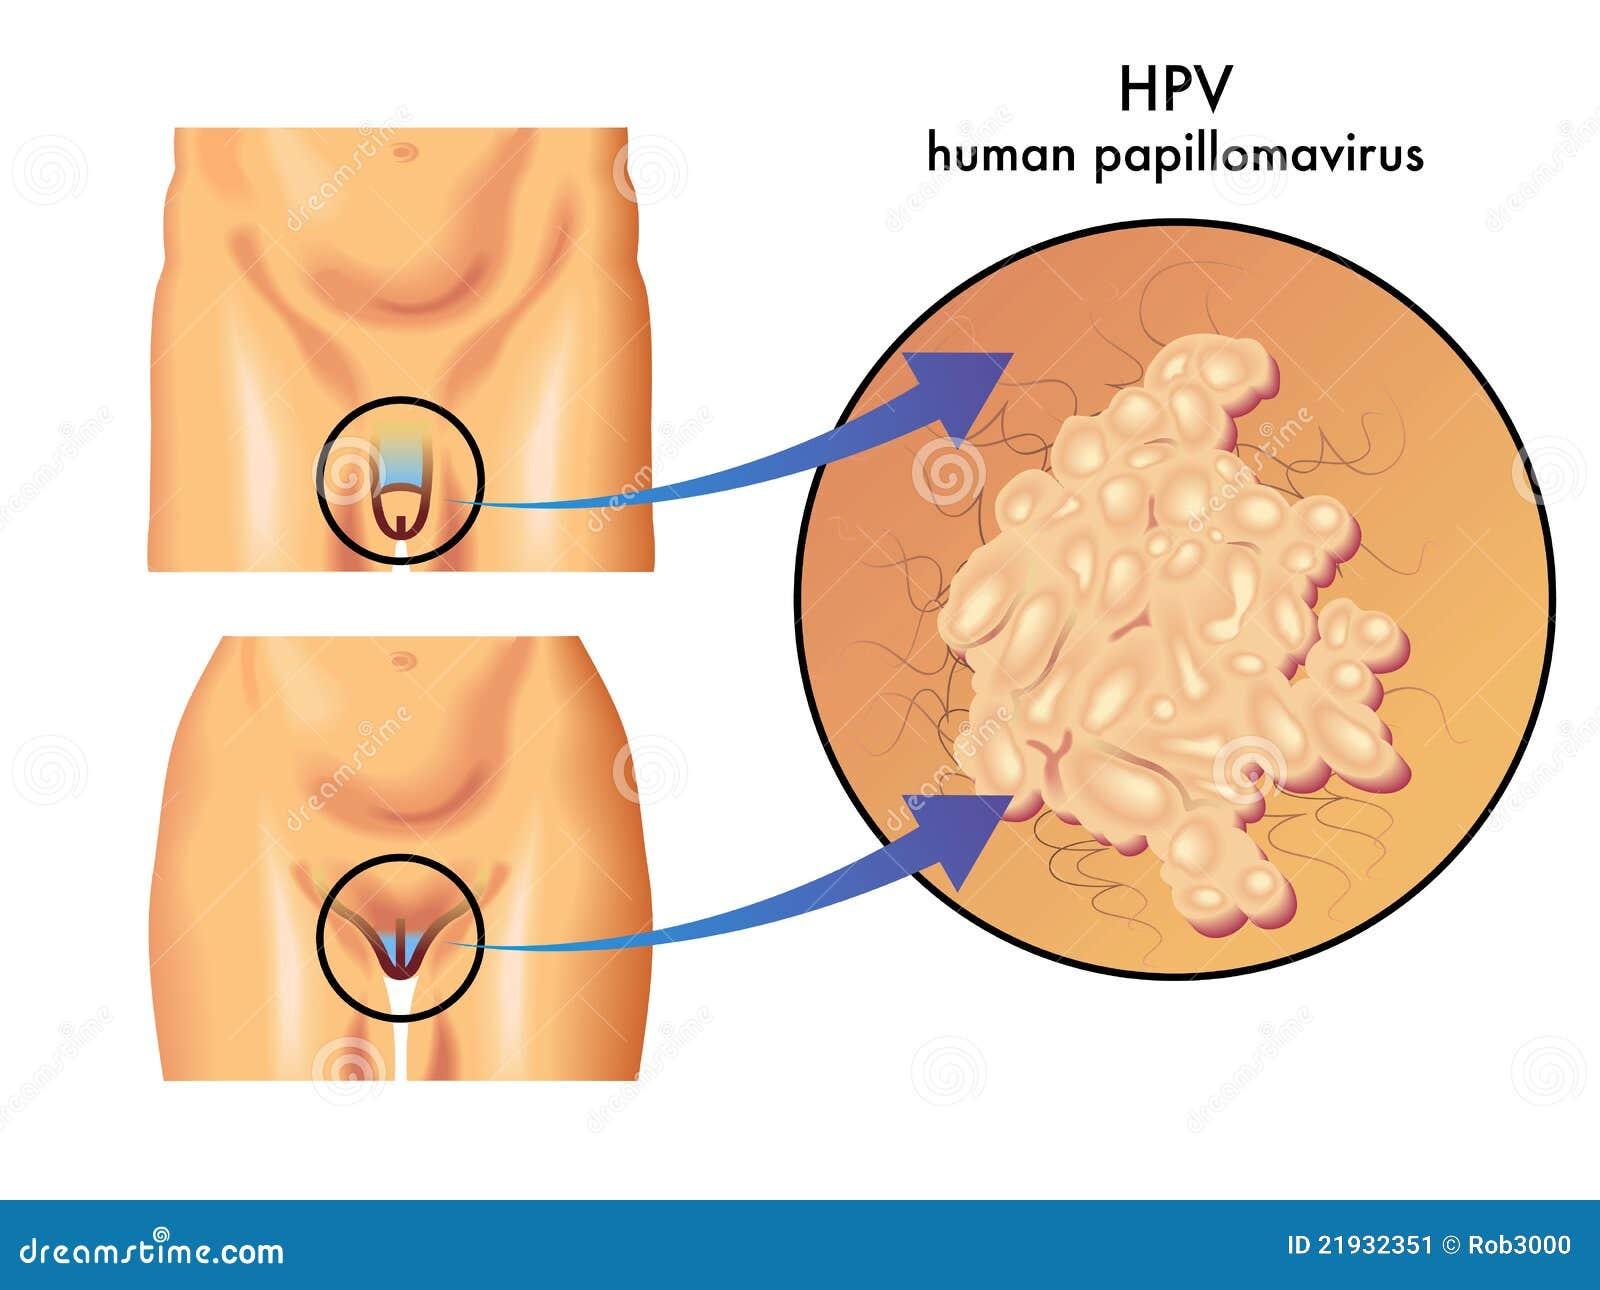 Papillomavirus femme detection, HPV Treatment hpv in mouth